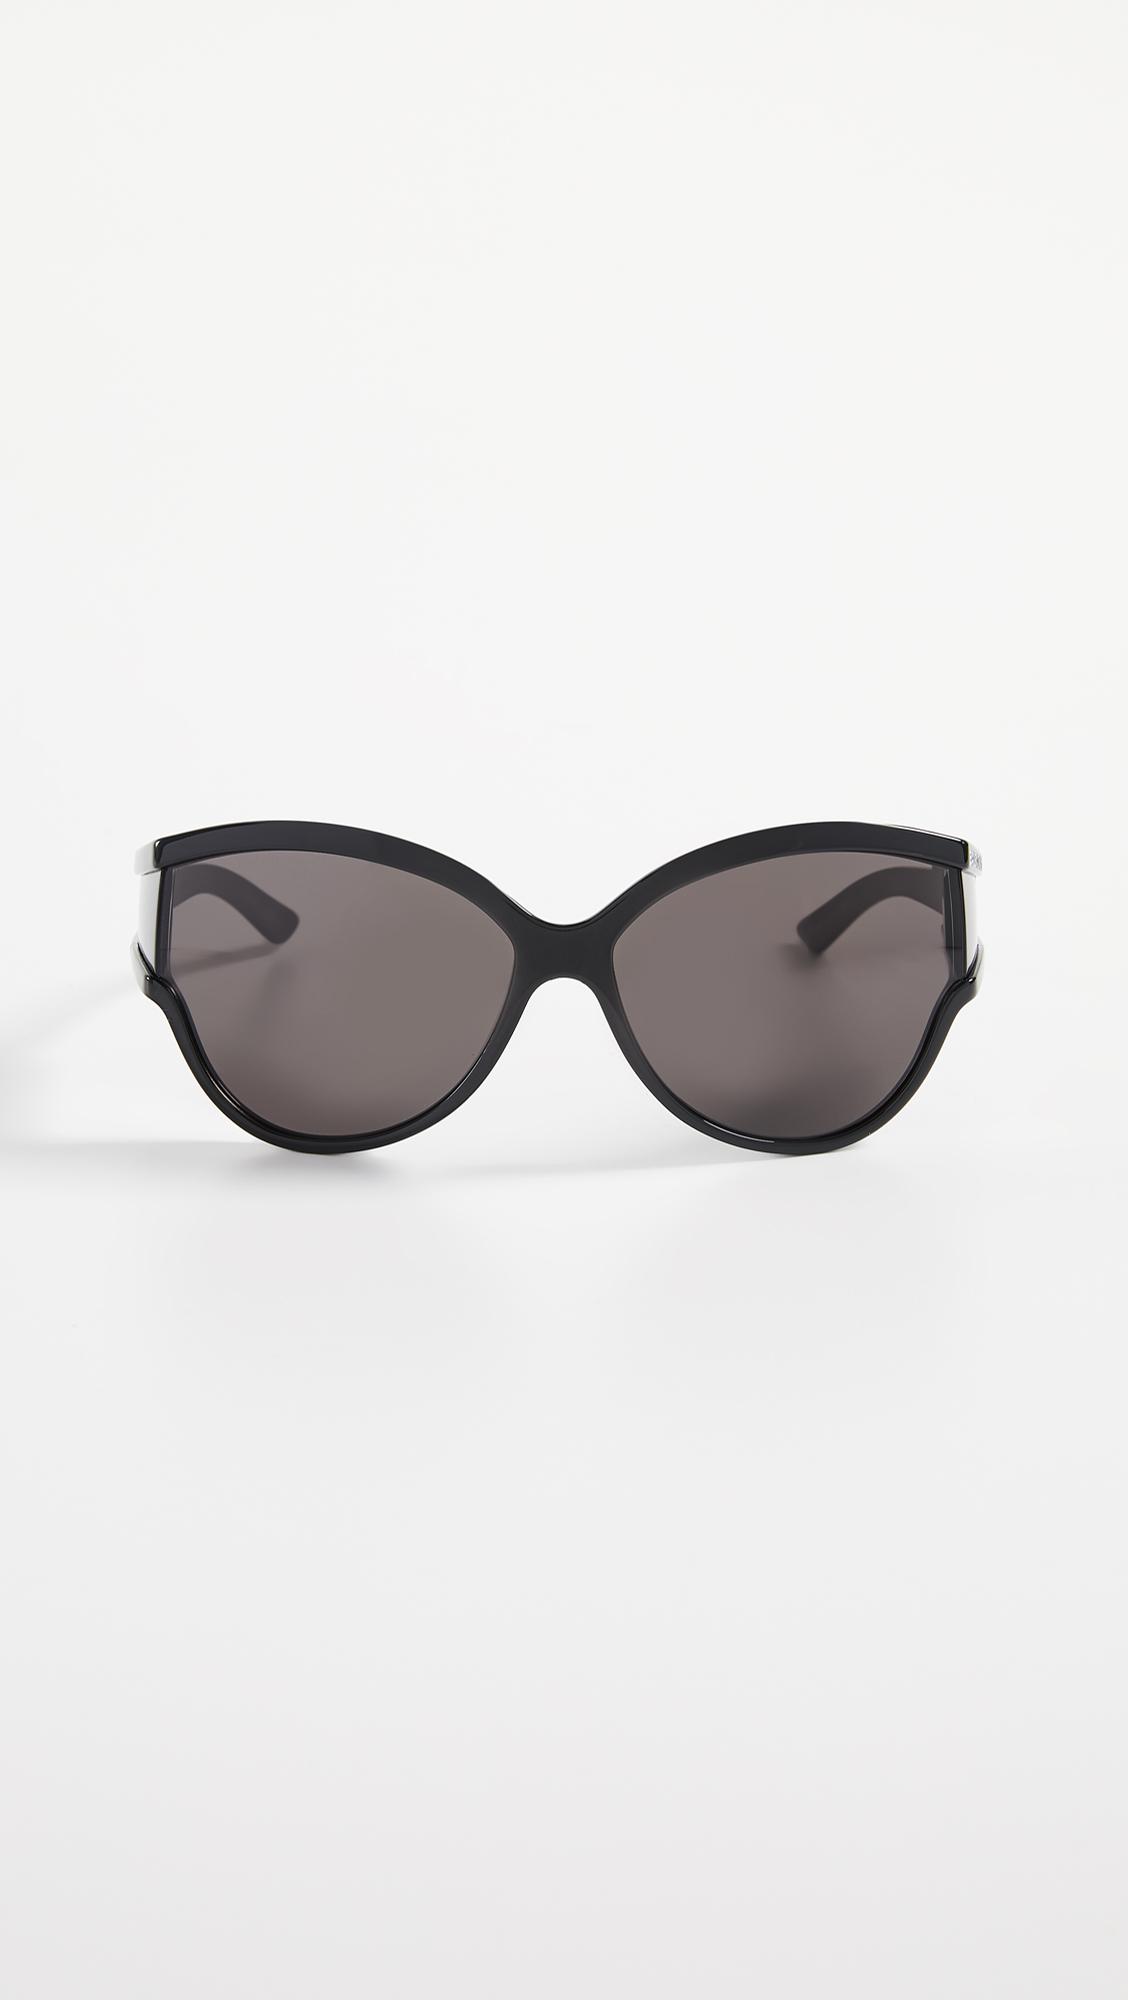 Balenciaga Unlimited Soft Mask Sunglasses in Gray - Lyst